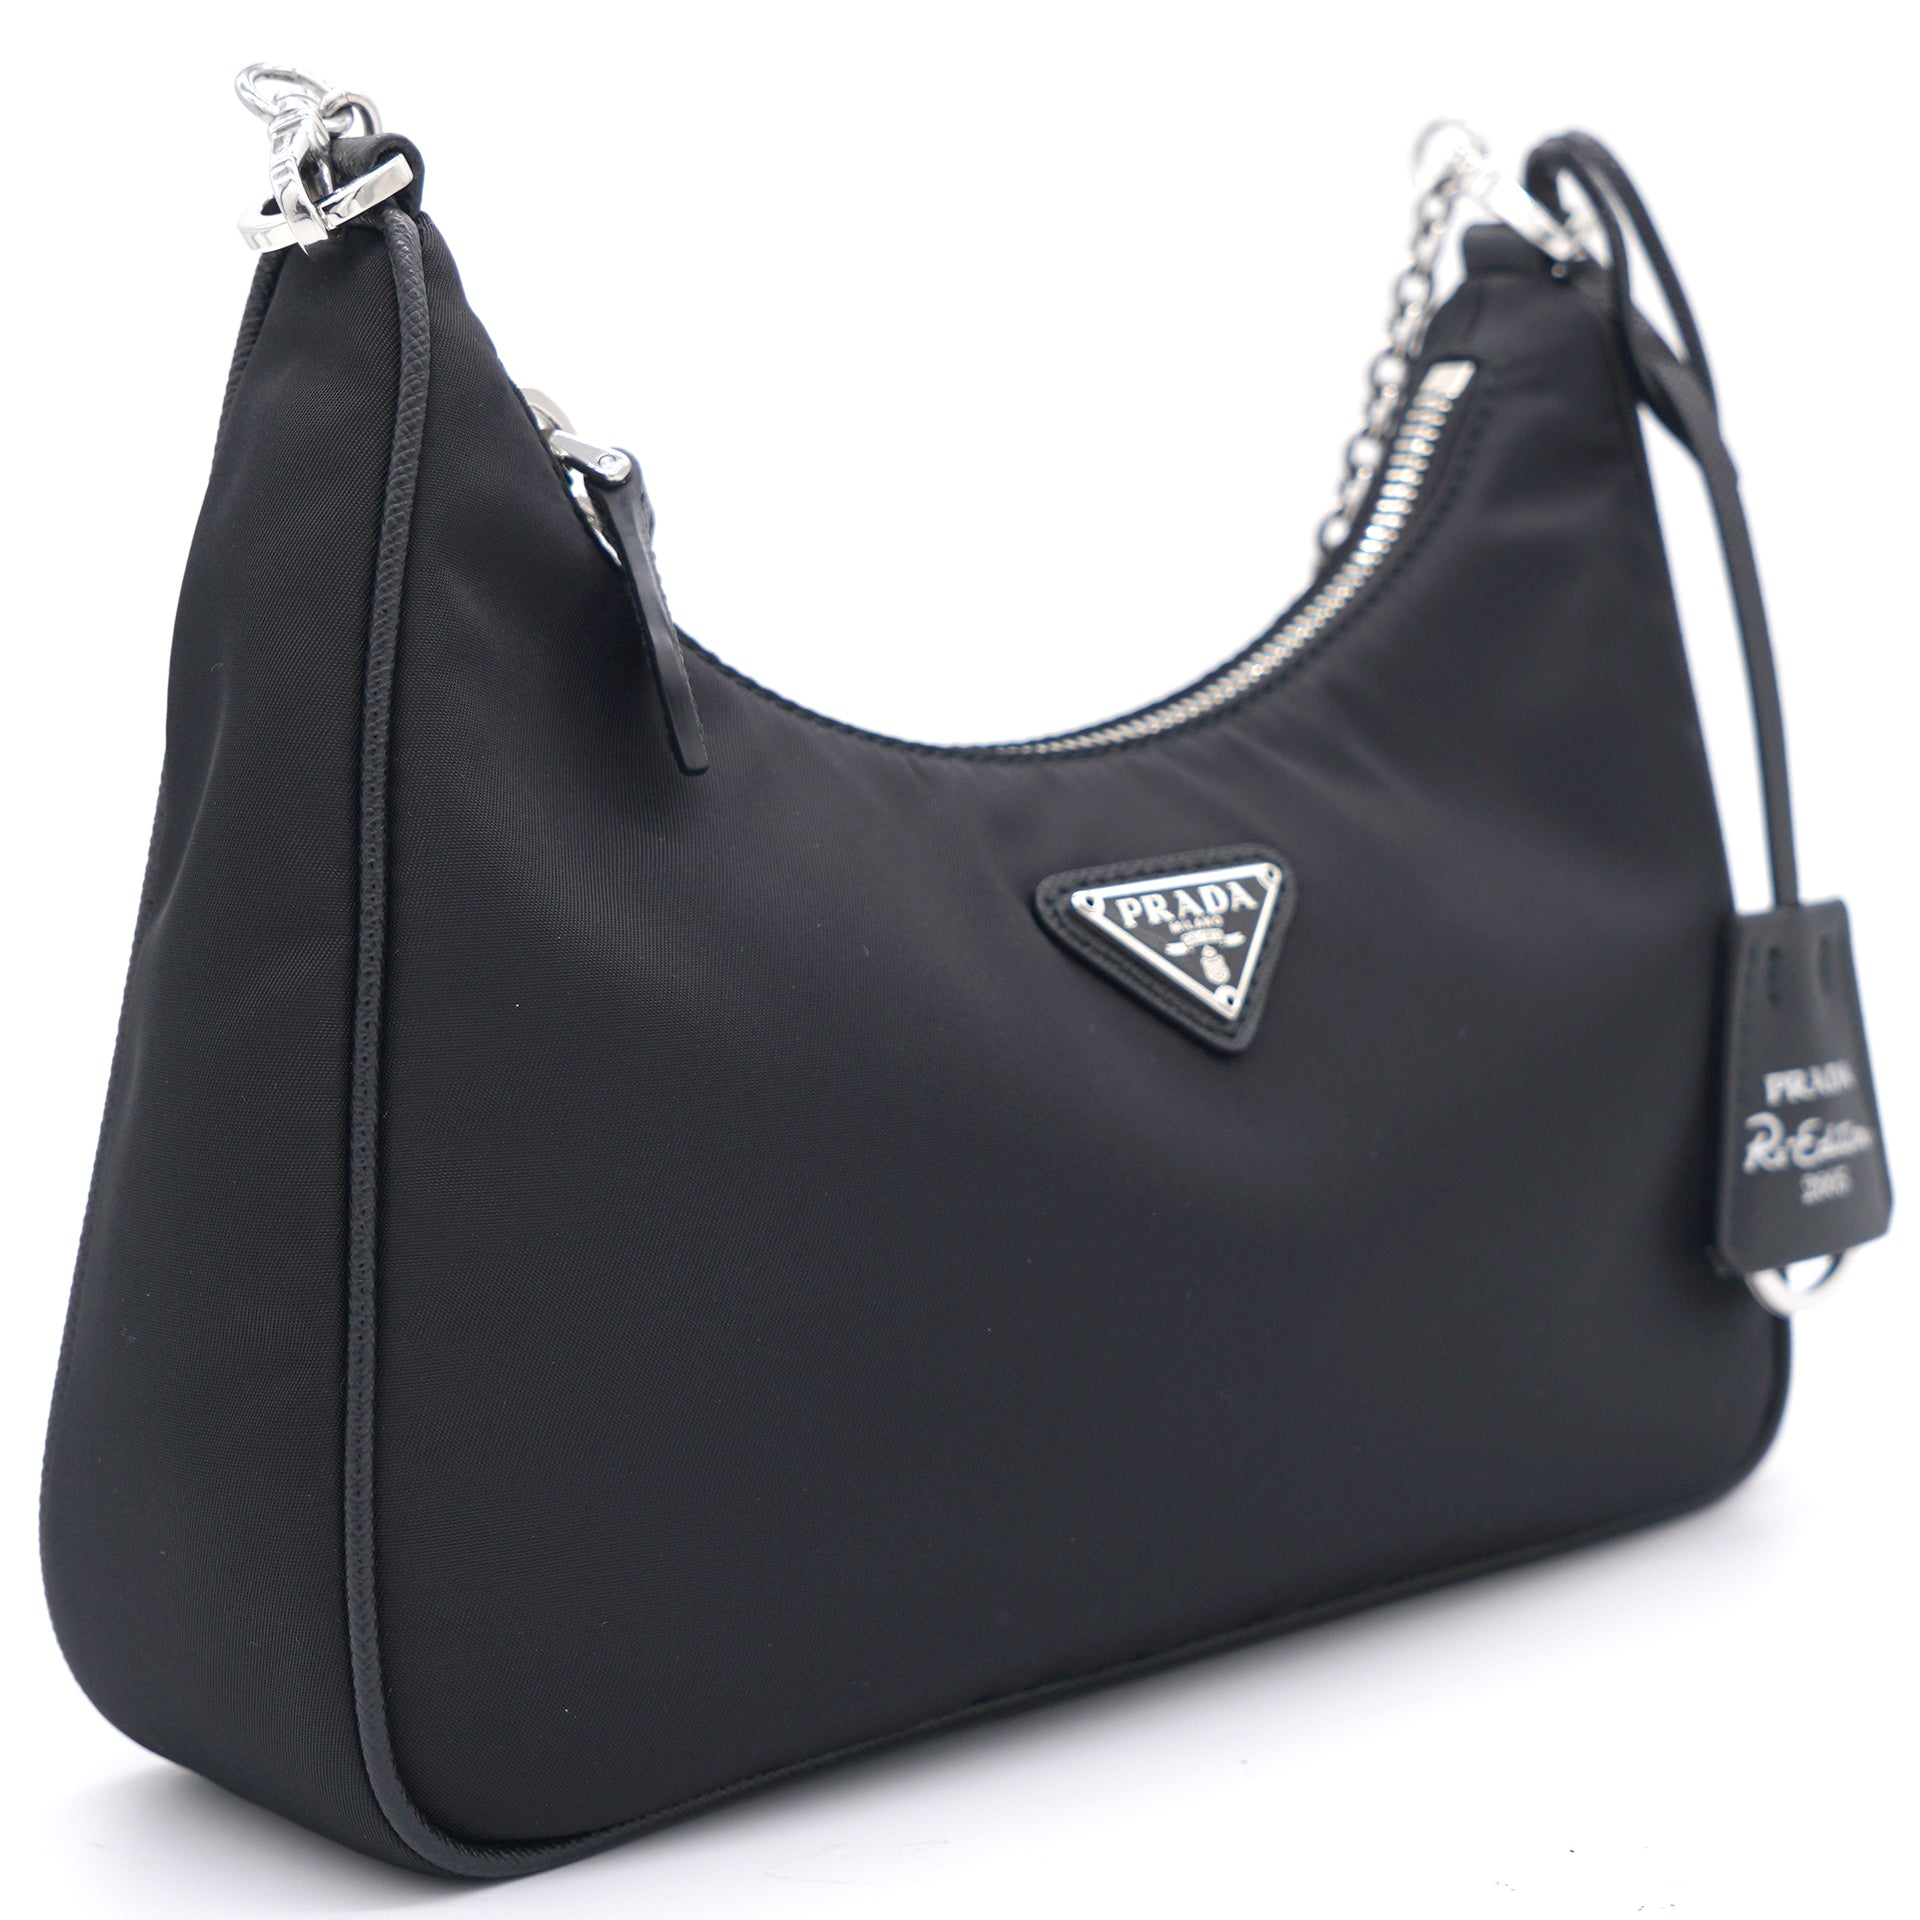 Prada Bauletto Recycled Nylon Shoulder Bag in Black